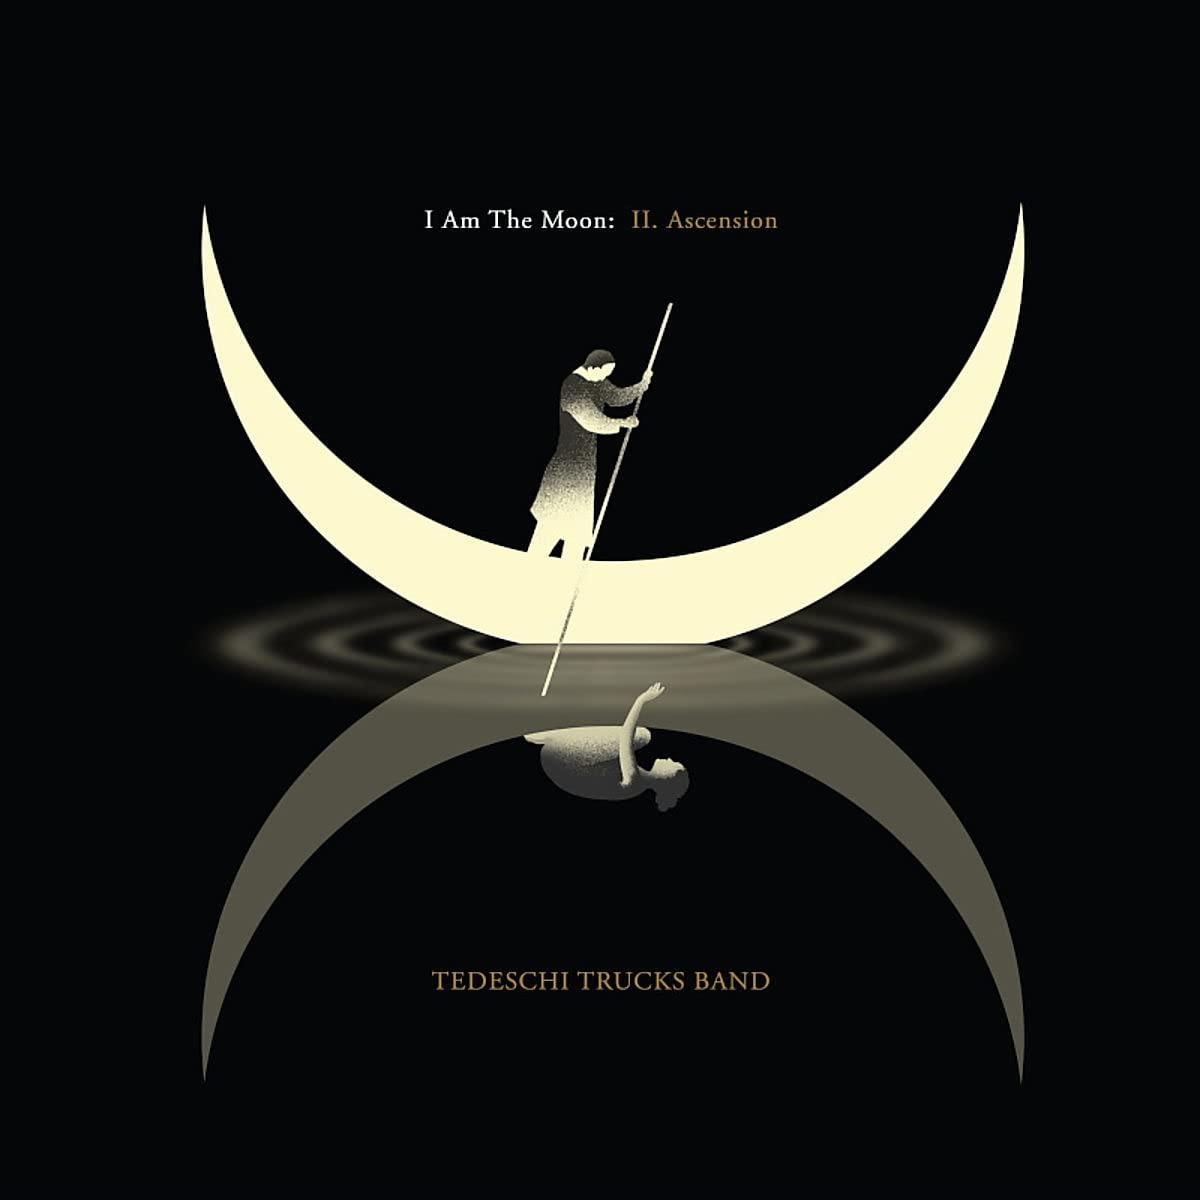 I AM Trucks - ASCENSION Tedeschi (CD) - MOON: THE II. Band